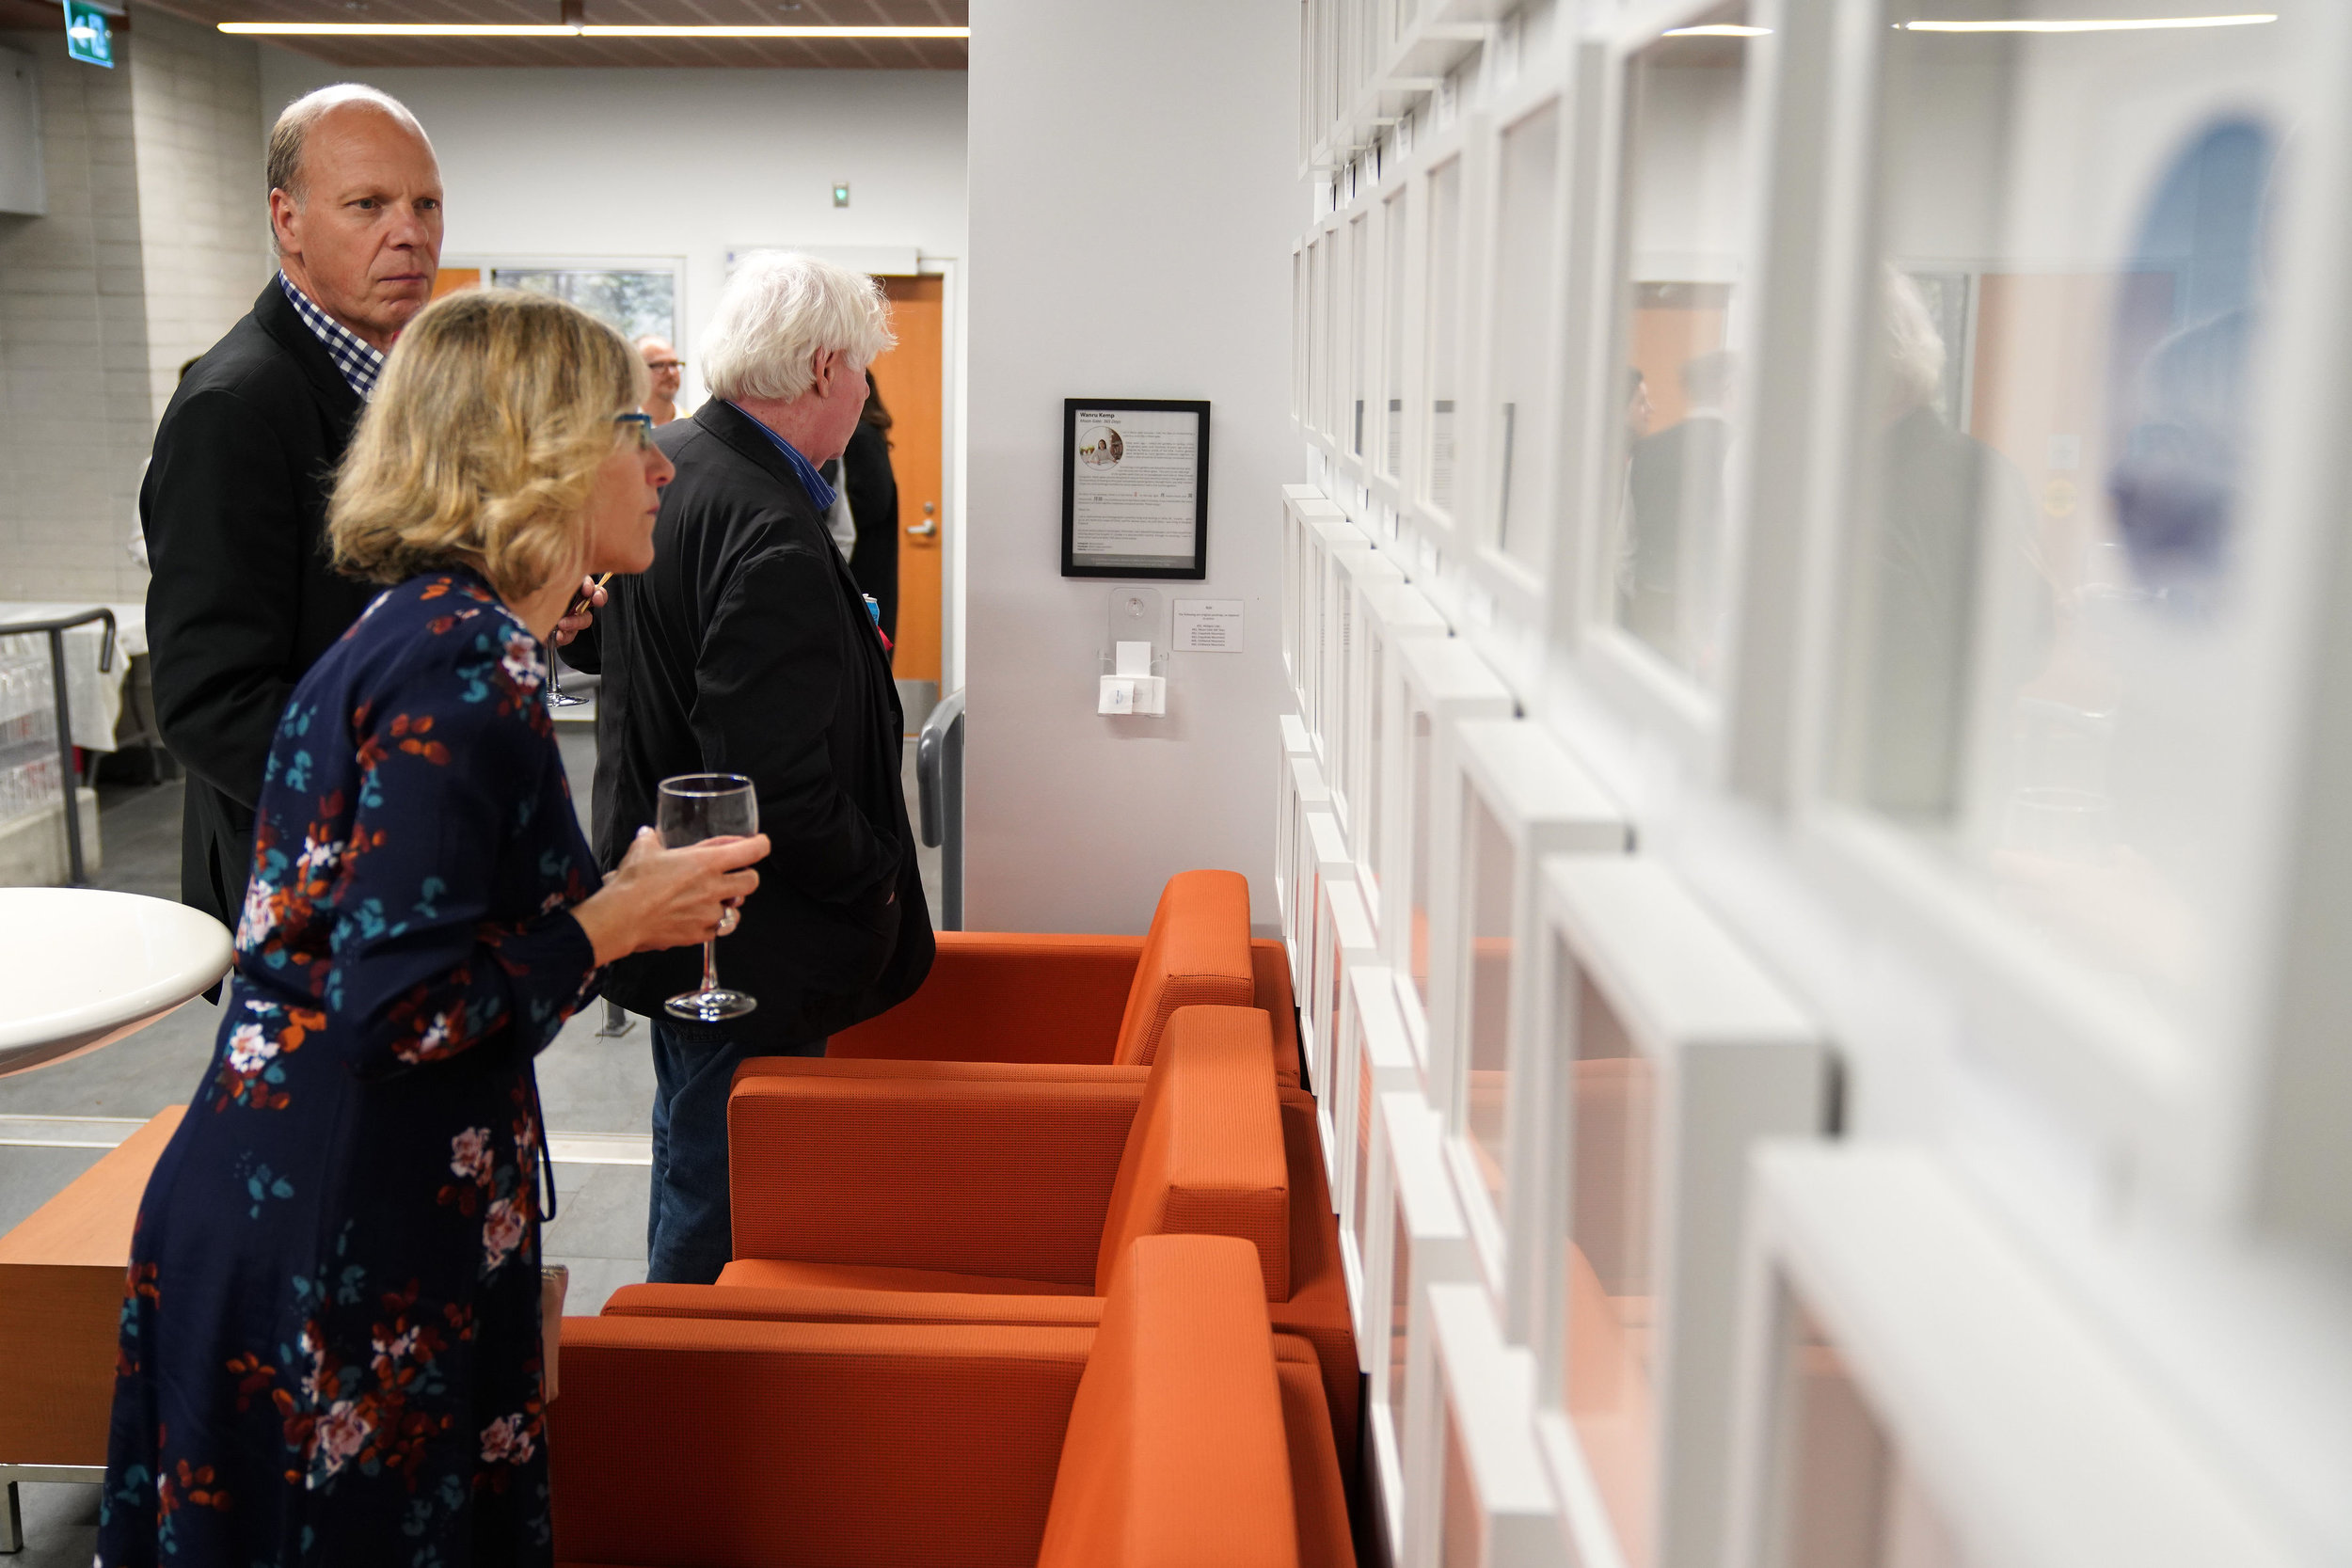  FANS Sponsor Stan Van Woerkens and guests view the art display 